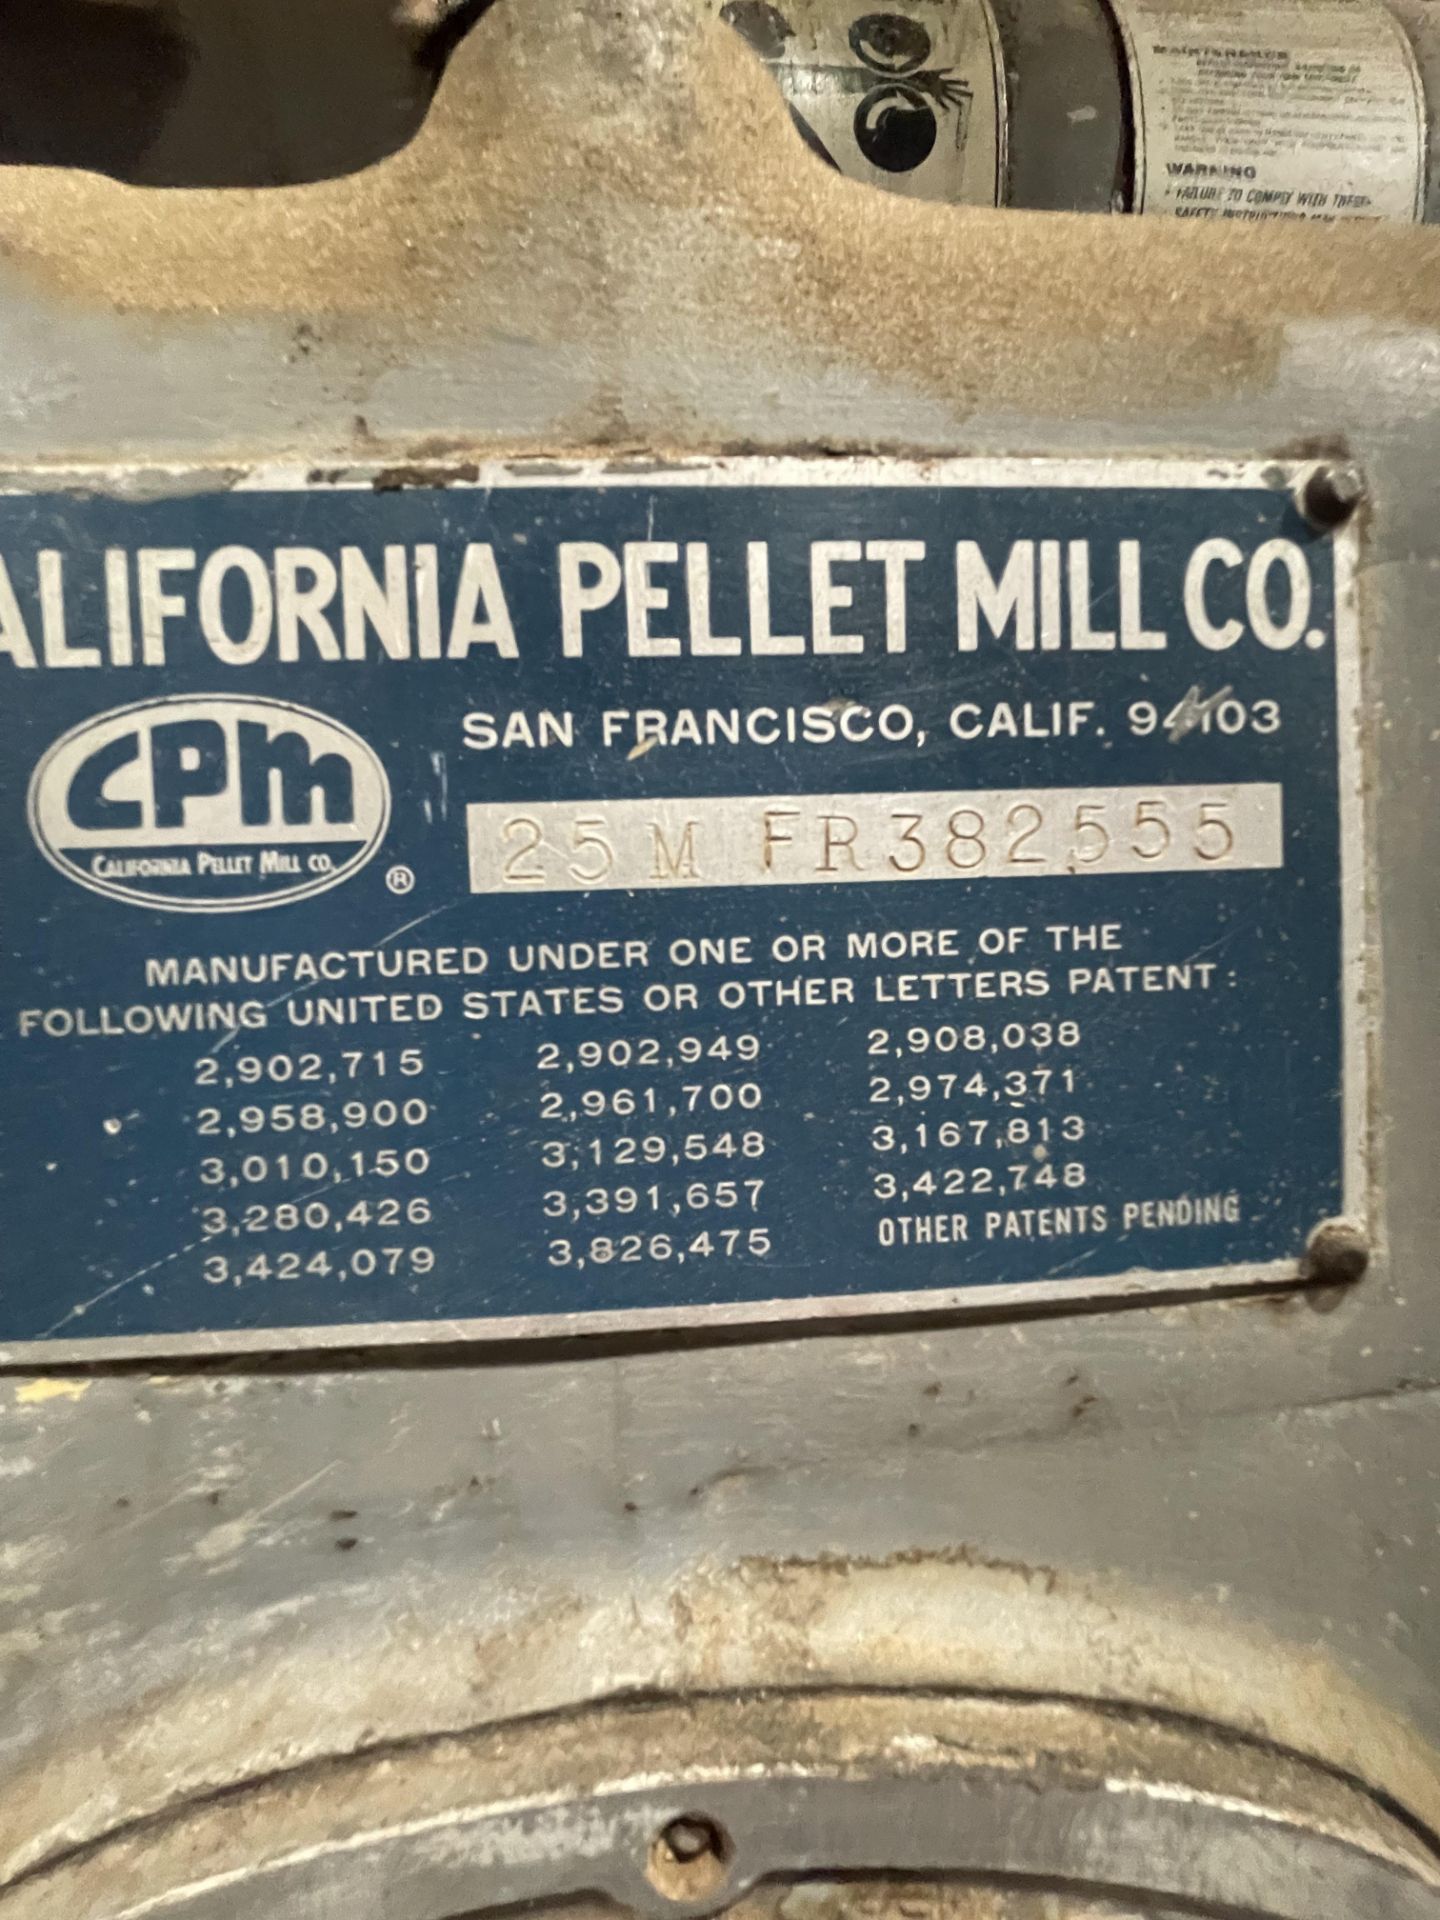 CALIFORNIA PELLET MILL, MODEL 25 M FR 382555, VERTICAL SPINDLE RECIPROCATING PELLET MILL, POWERED - Image 9 of 12